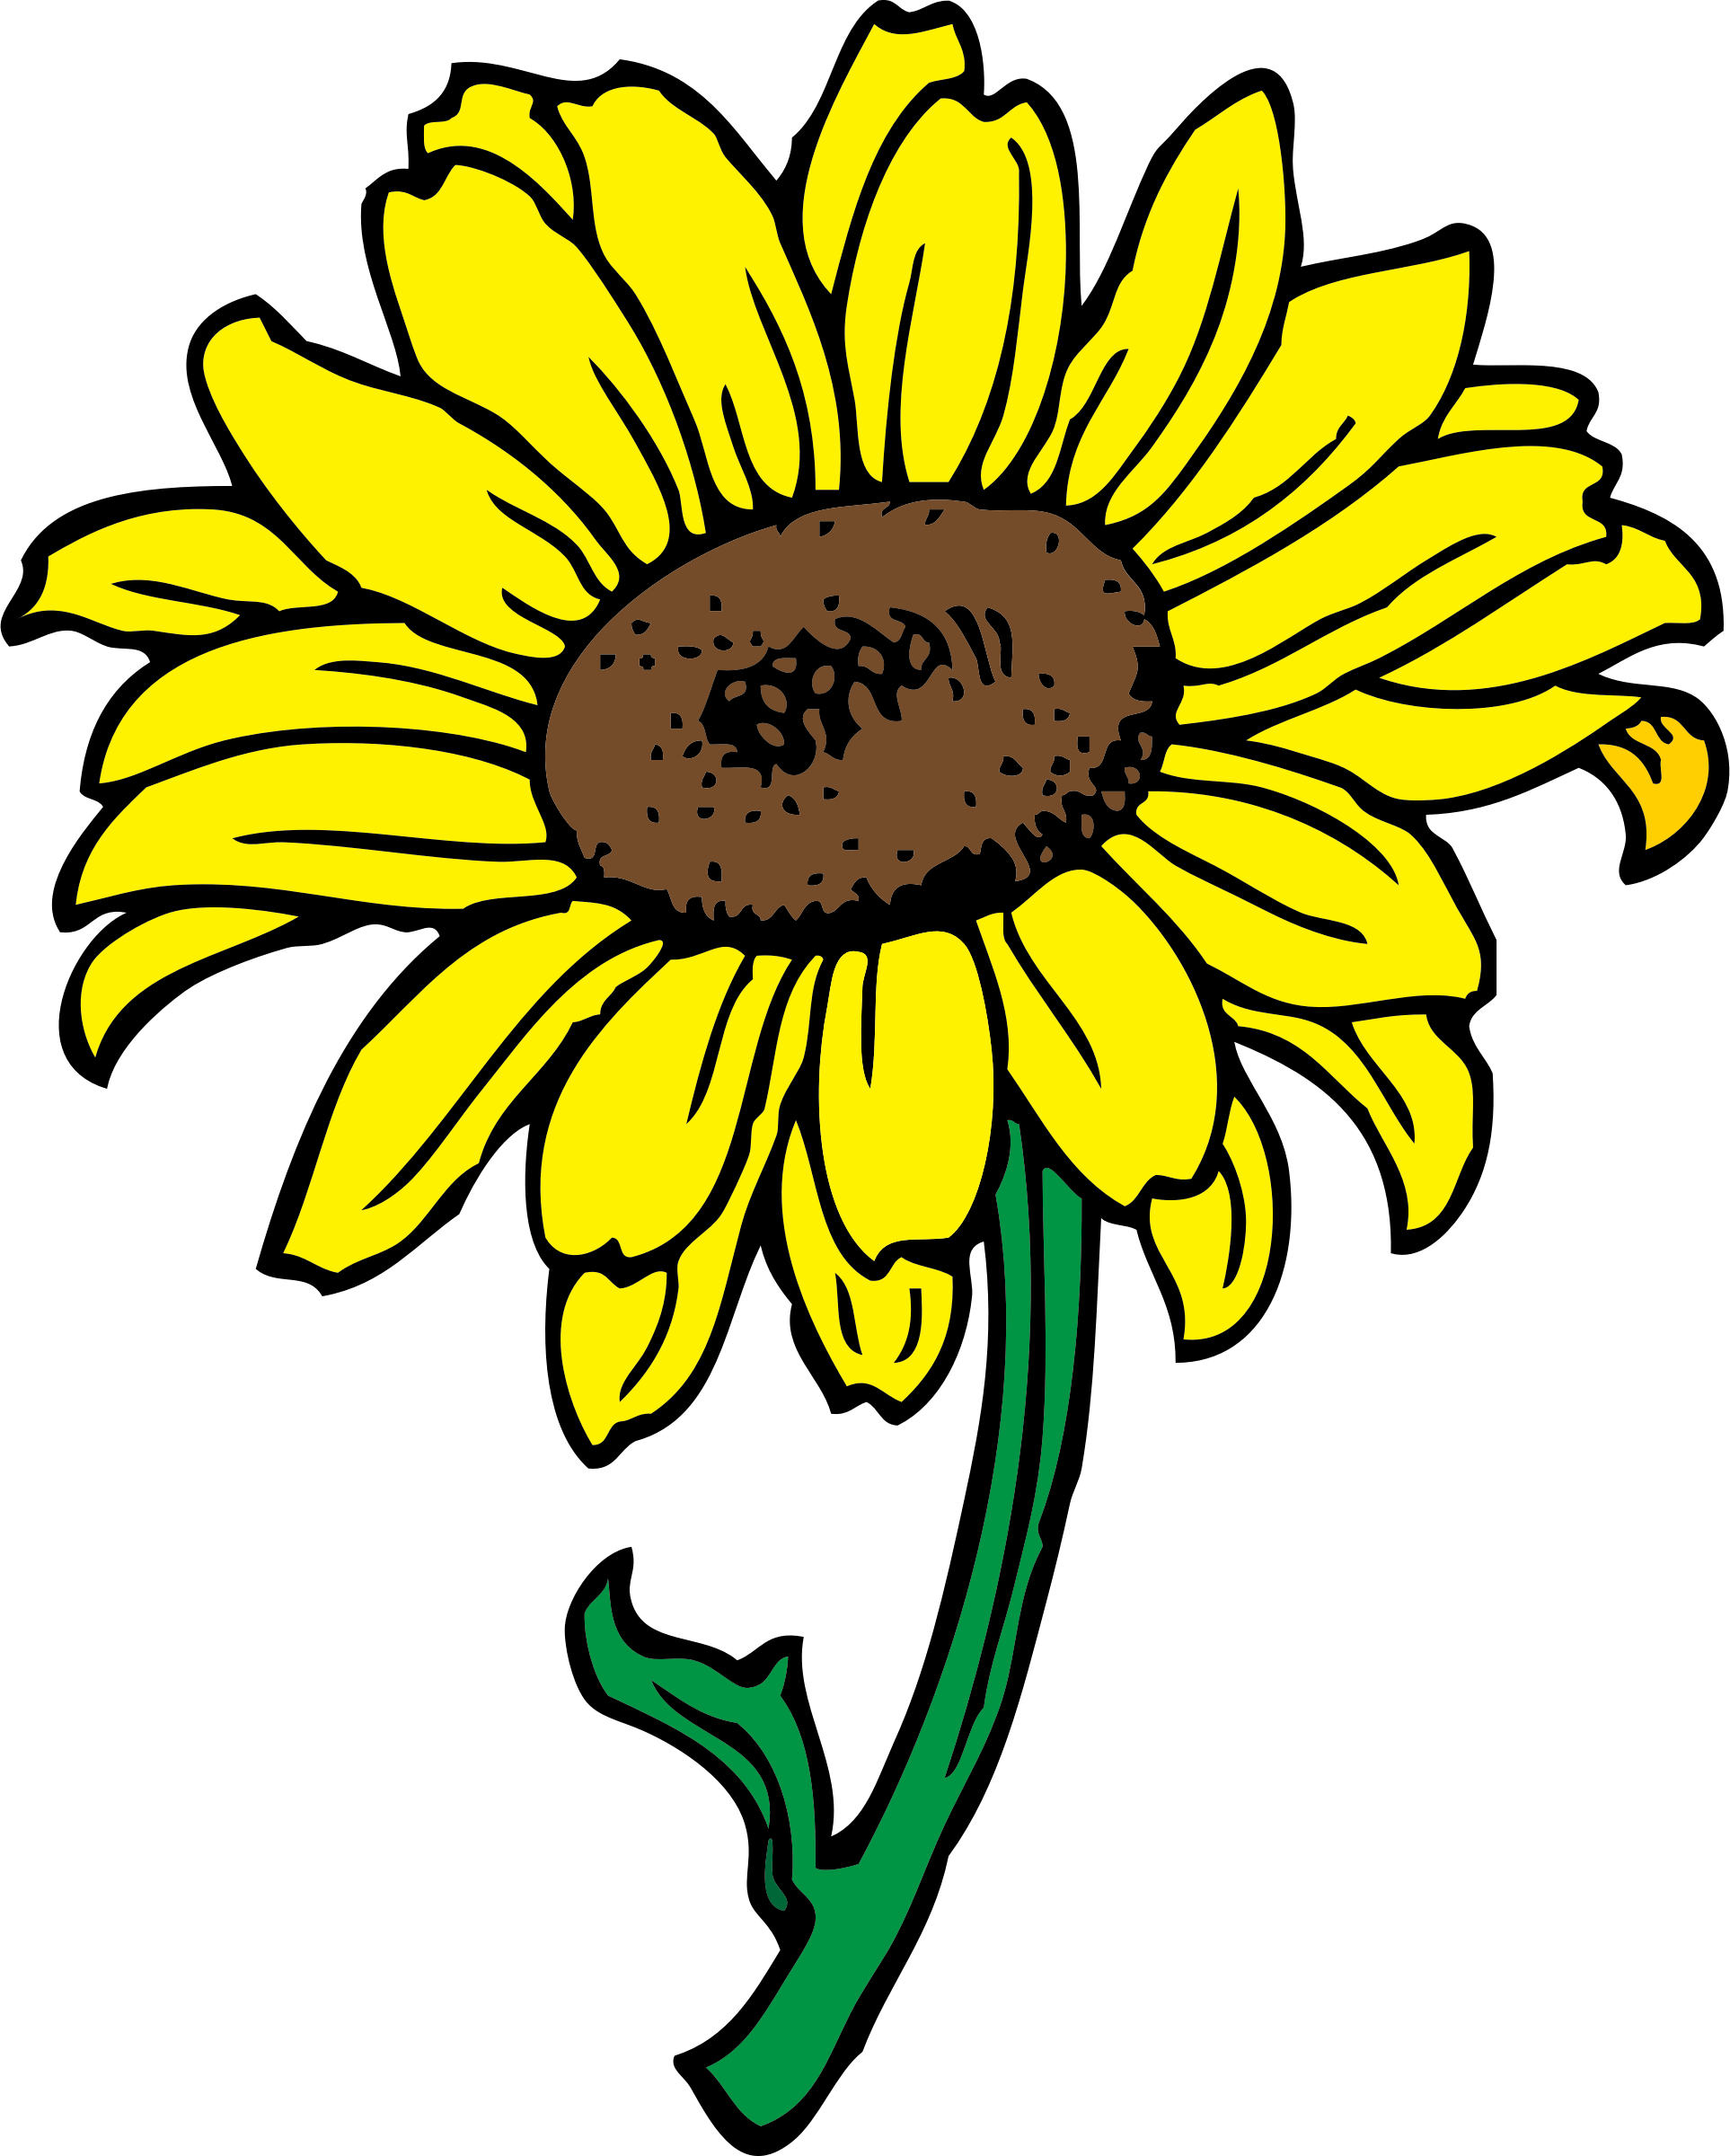 Sunflower - Sunflower Clipart Transparent Background.